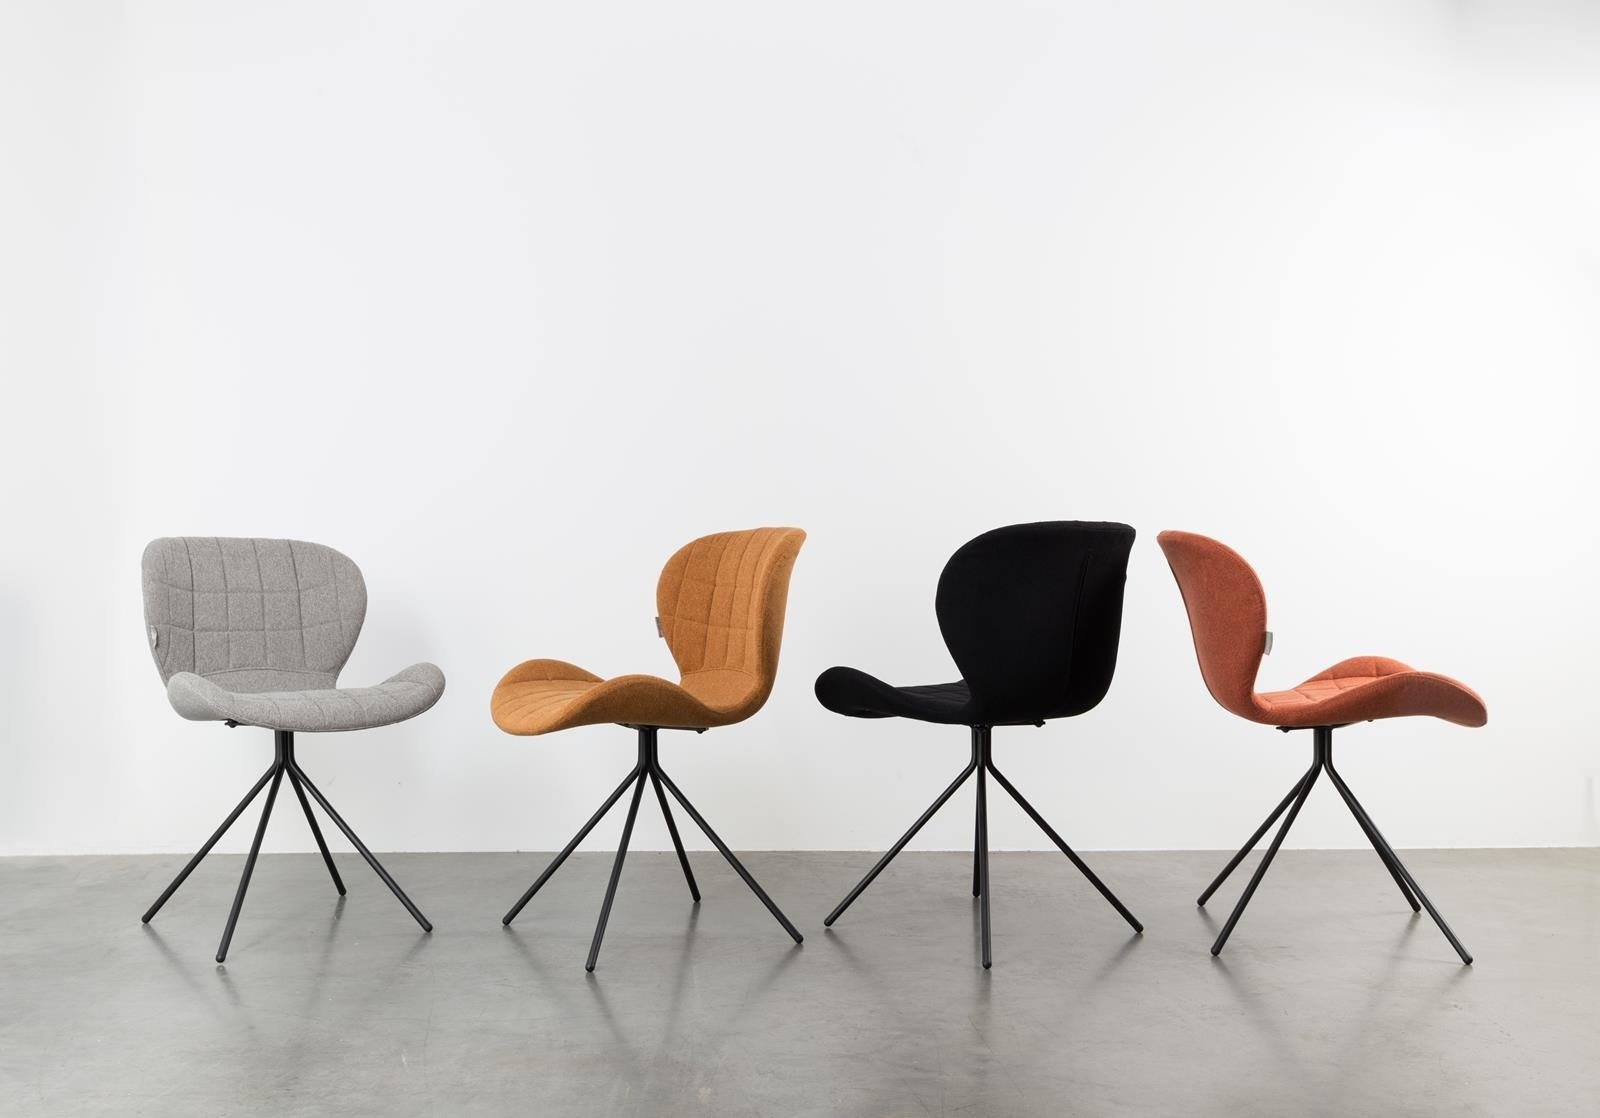 OMG chair black, Zuiver, Eye on Design